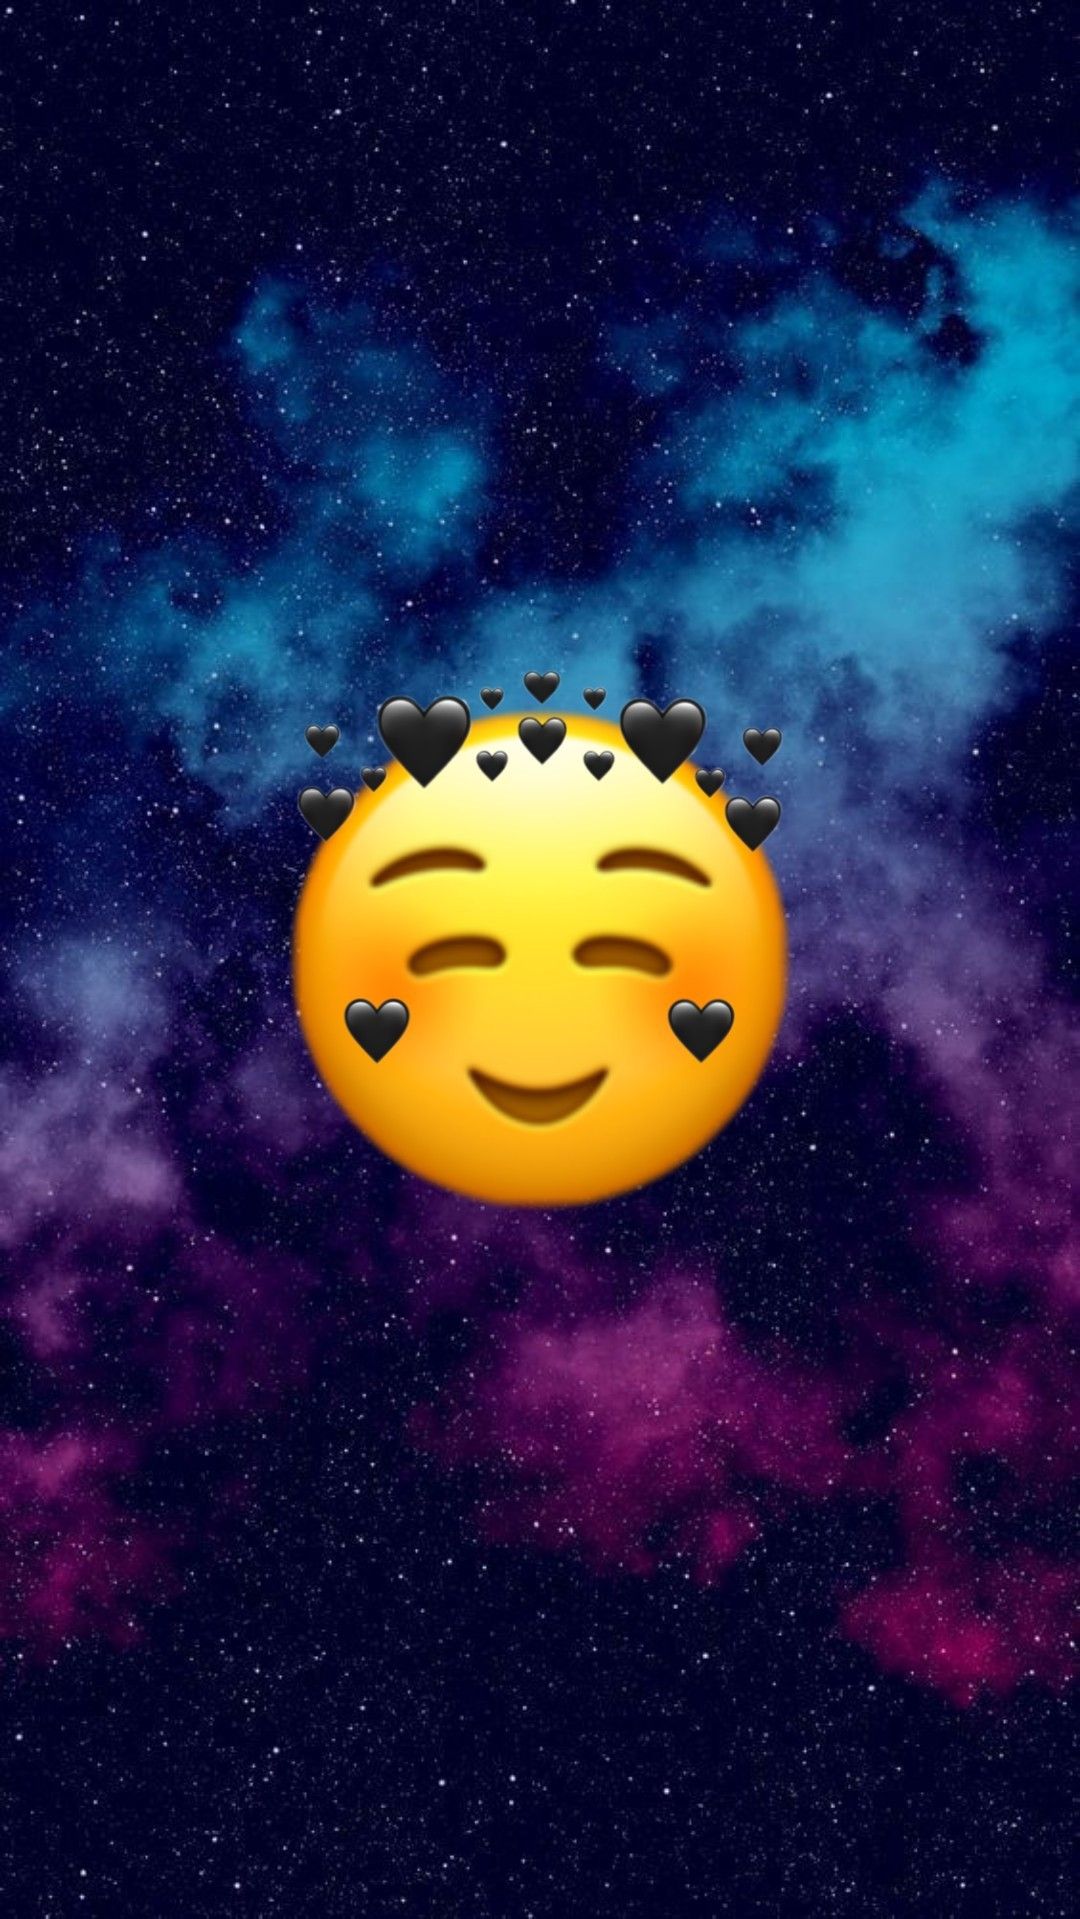 Galaxy Emoji Wallpapers